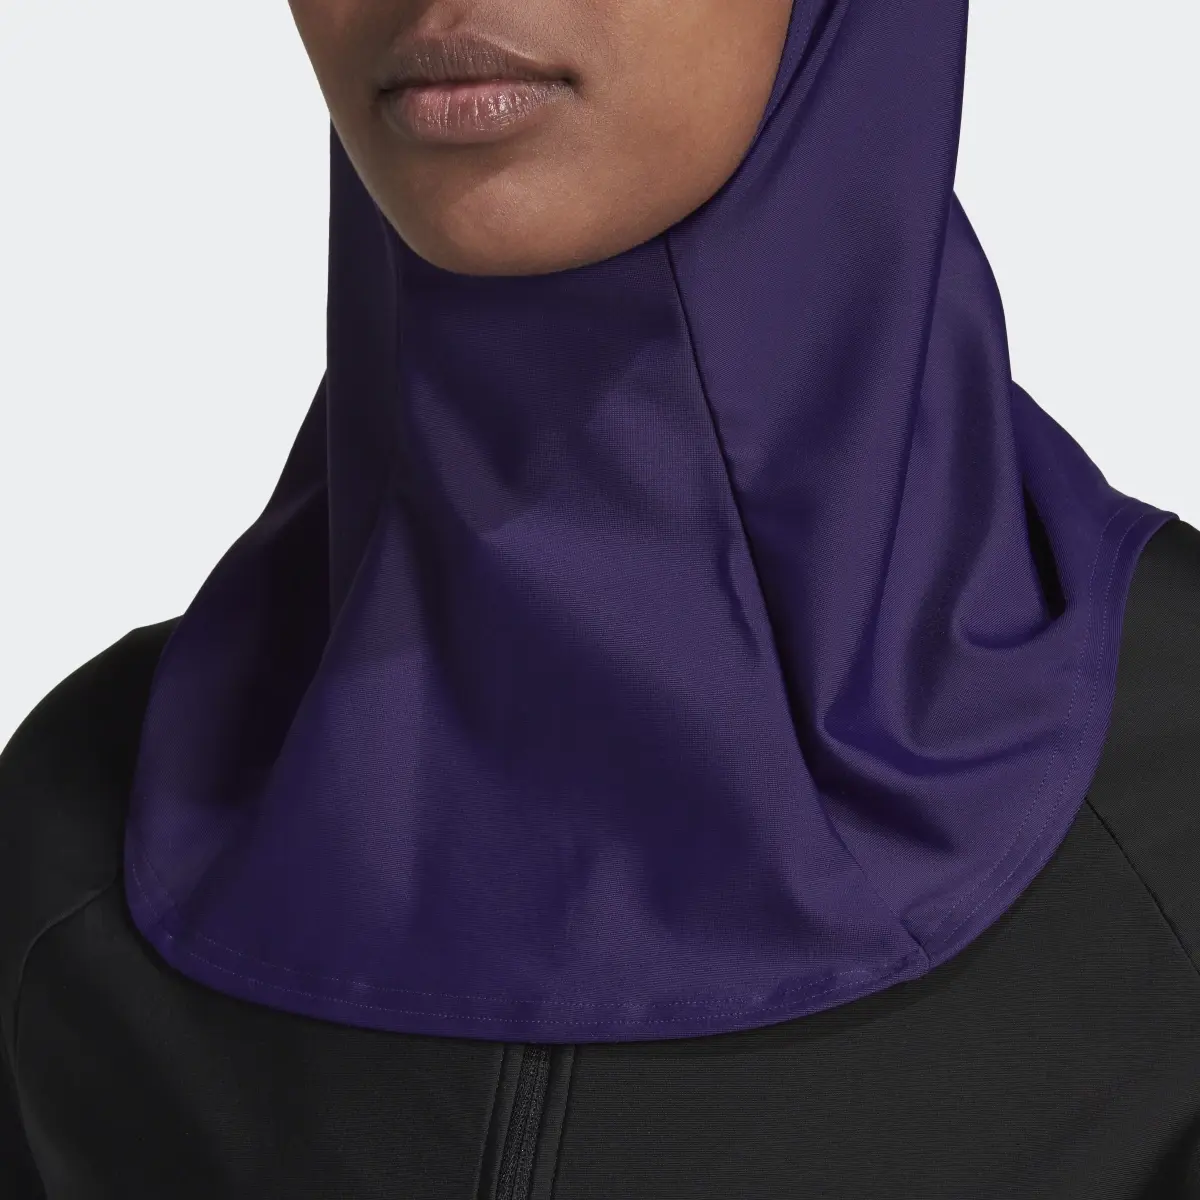 Adidas 3-Stripes Swim Hijab. 2